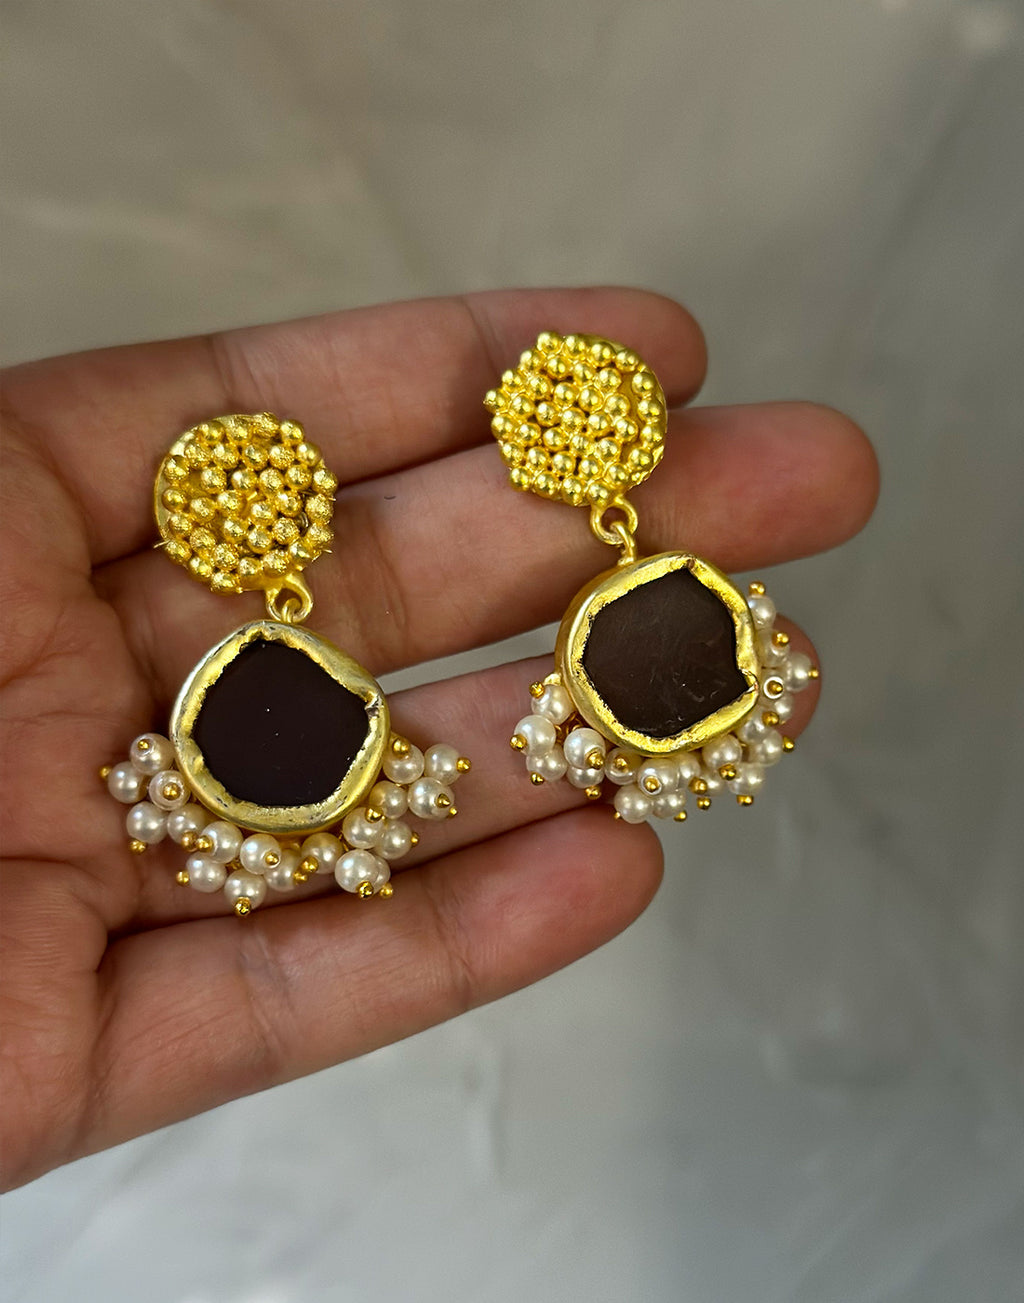 Adora Earrings (Quartz) - Statement Earrings - Gold-Plated & Hypoallergenic Jewellery - Made in India - Dubai Jewellery - Dori